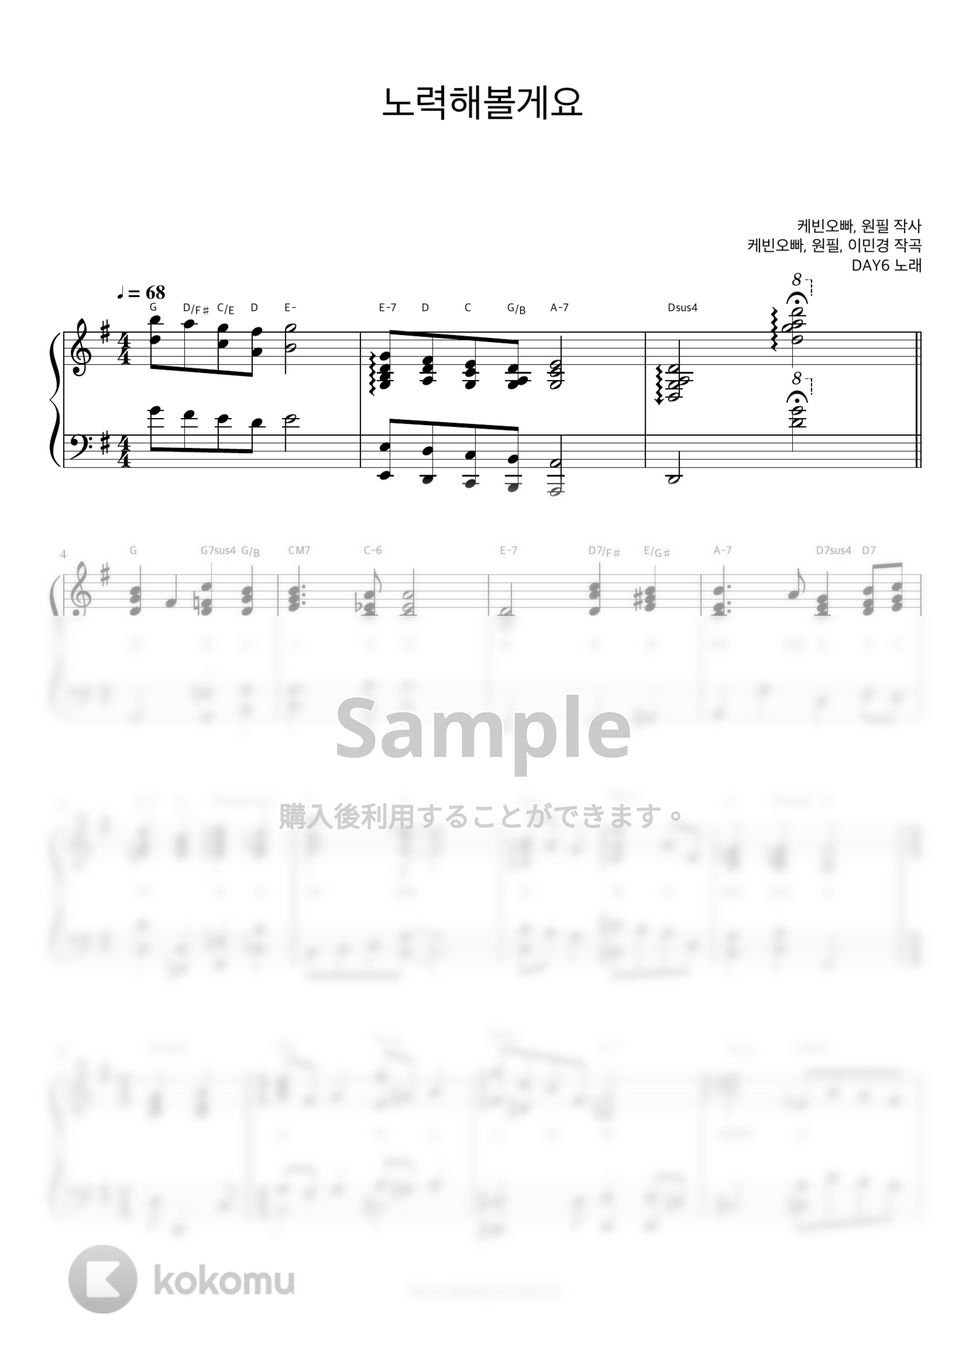 DAY6 - I'll Try (伴奏楽譜) by 피아노정류장